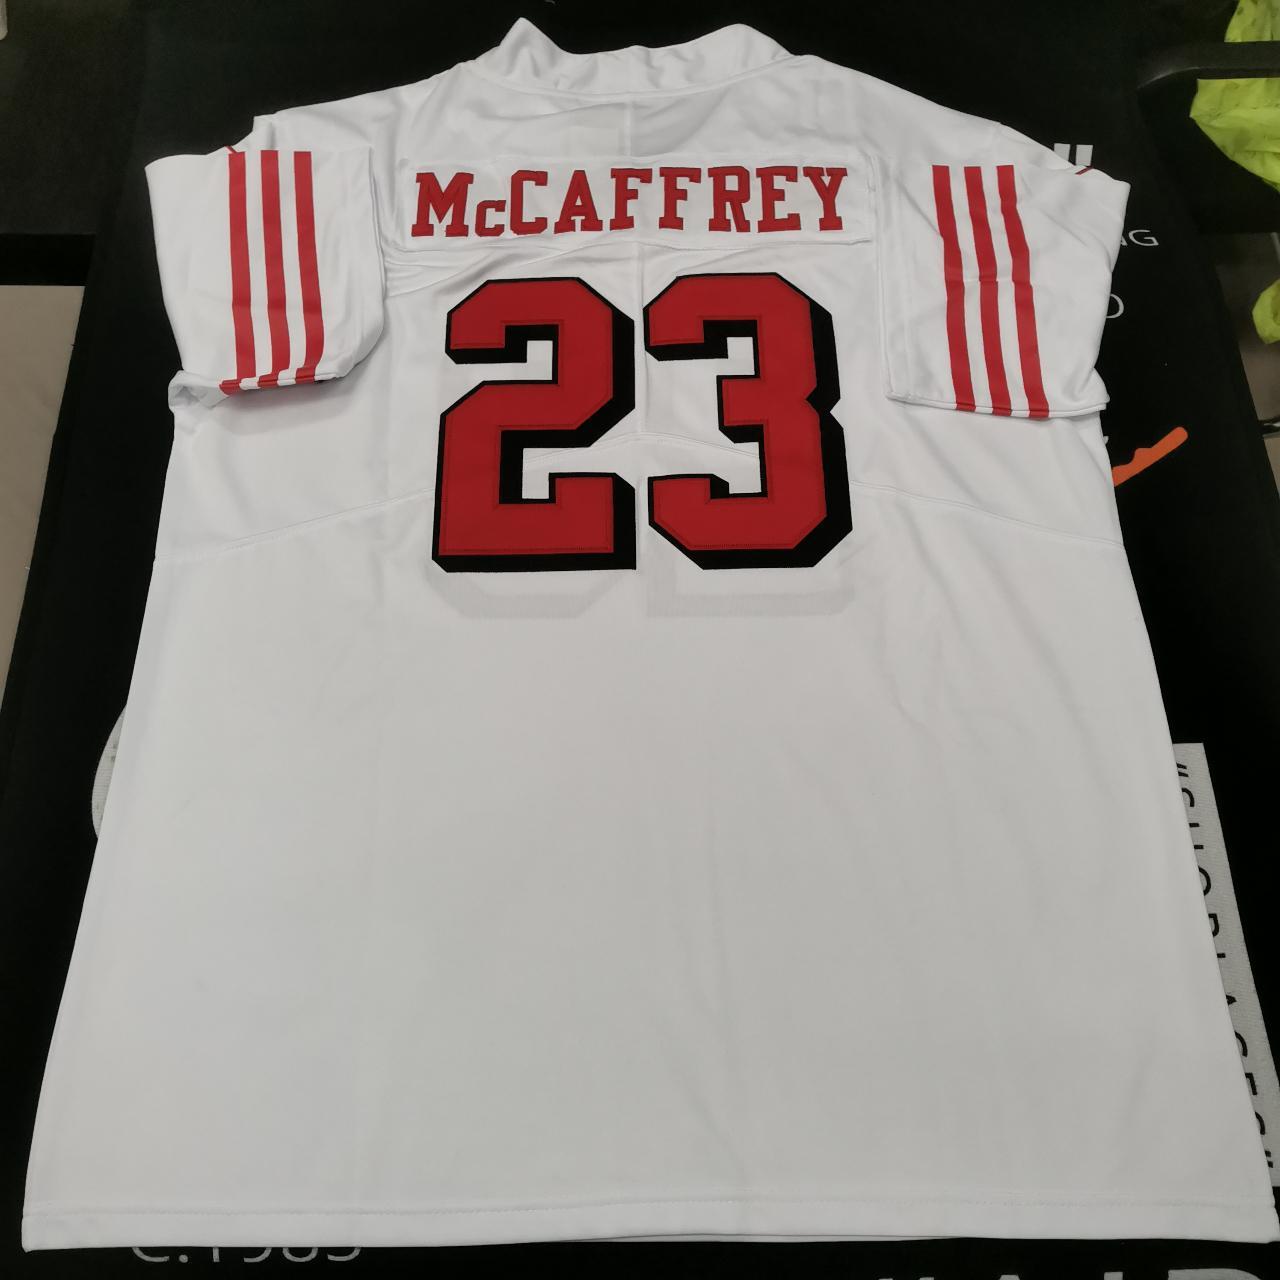 mccaffrey jersey niners